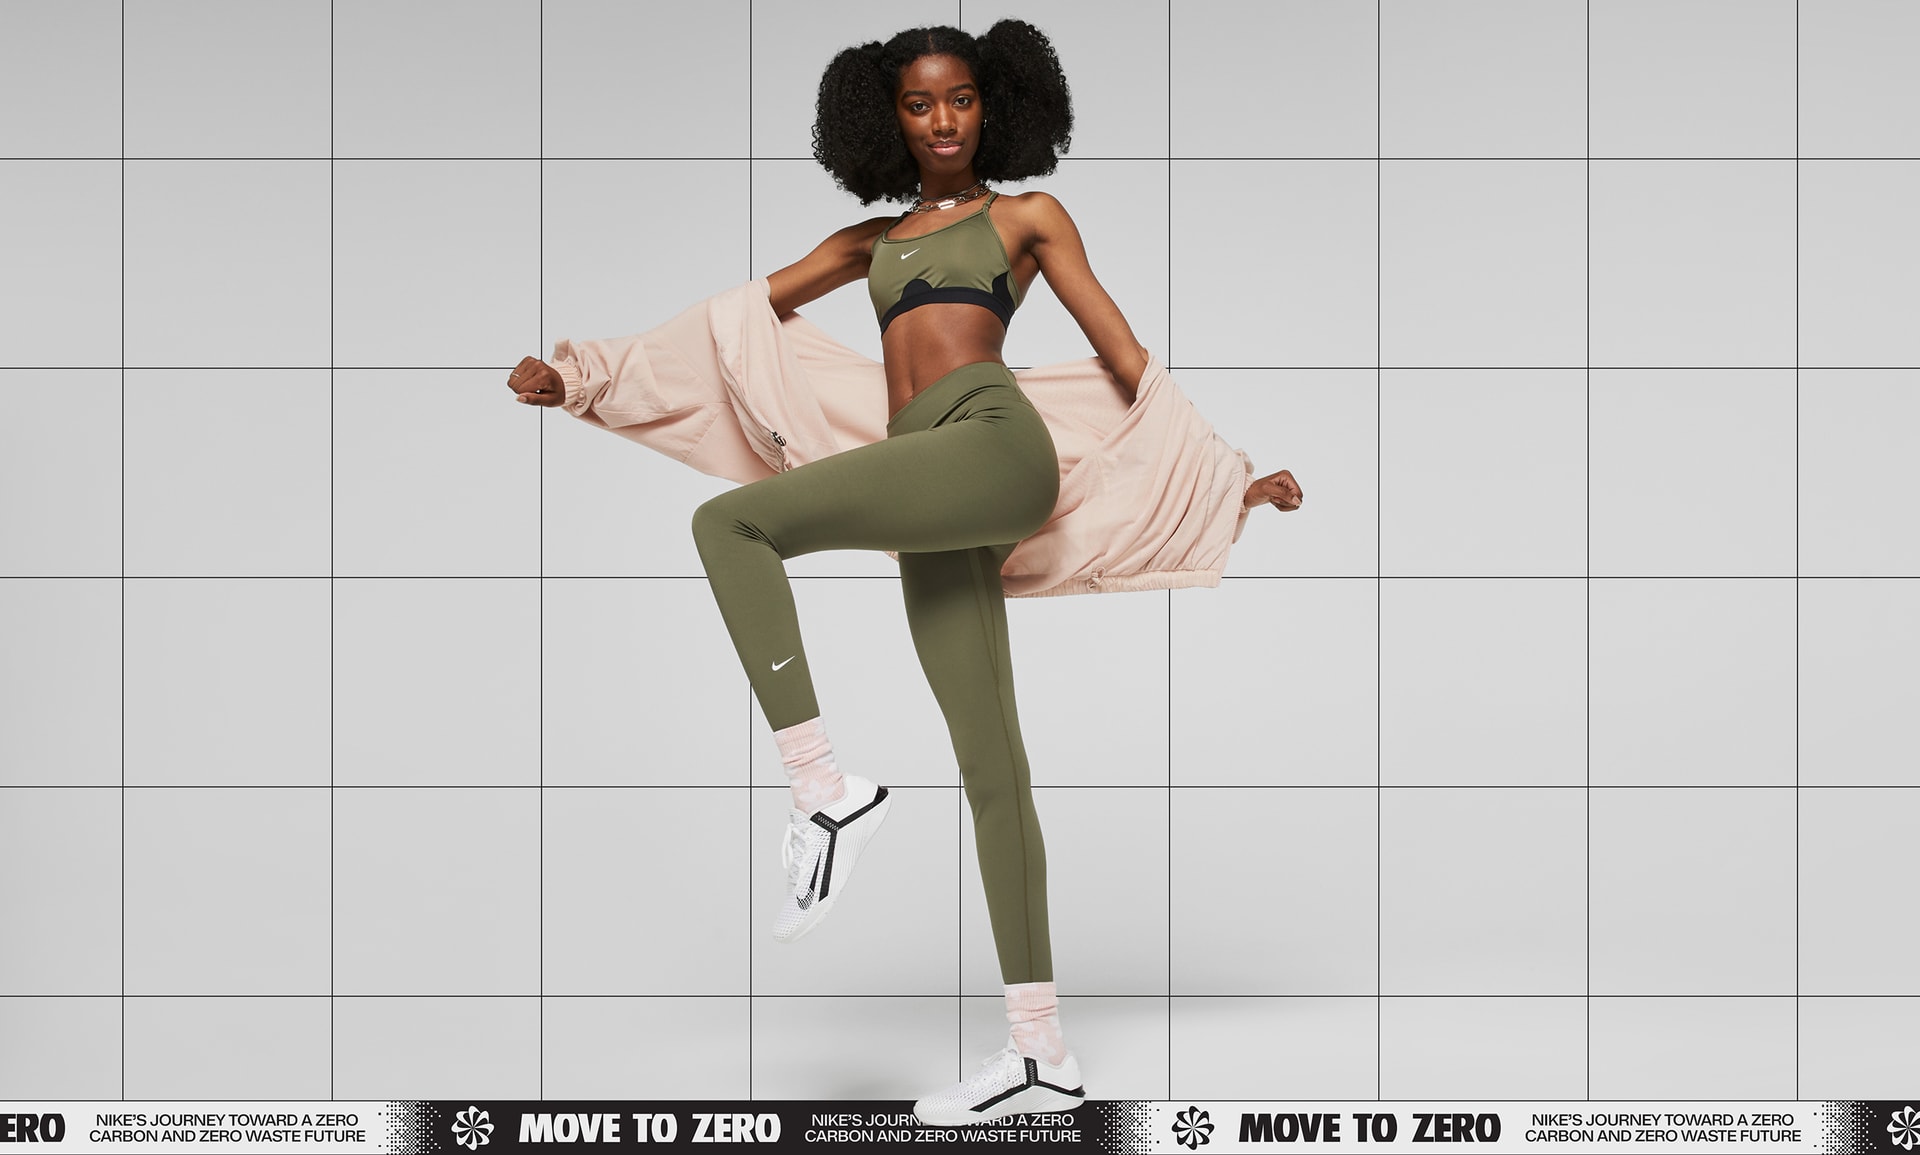 Nike Dri-FIT One Women's Mid-Rise Leggings Tights DD0252-010